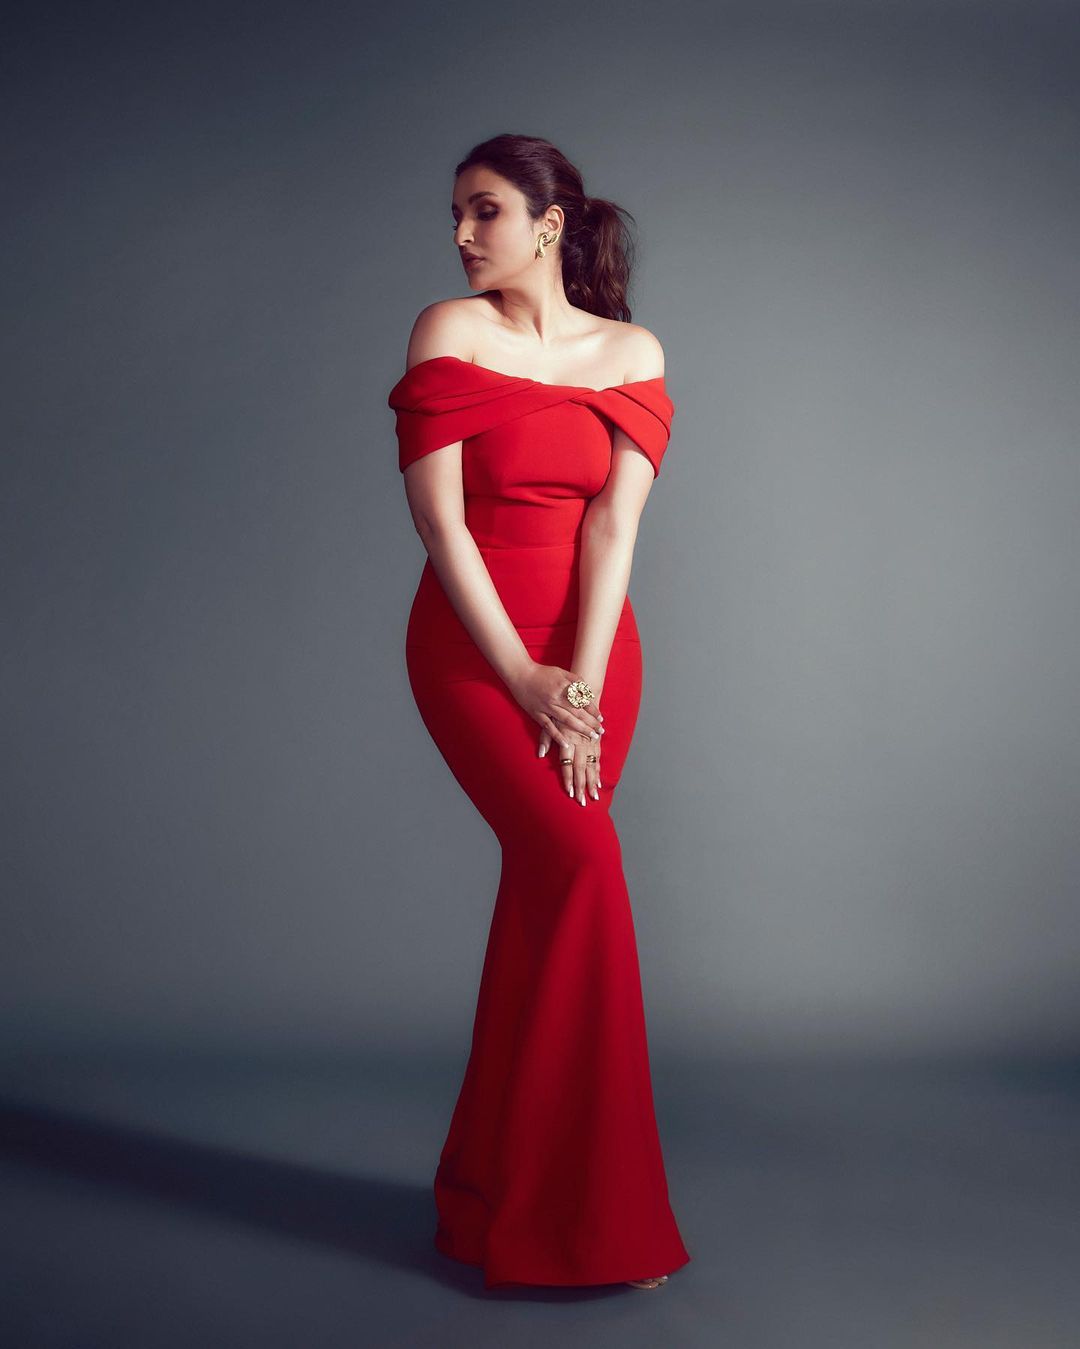 Parineeti Chopra Flaunts Hourglass Figure In Off-shoulder Red Gown ...